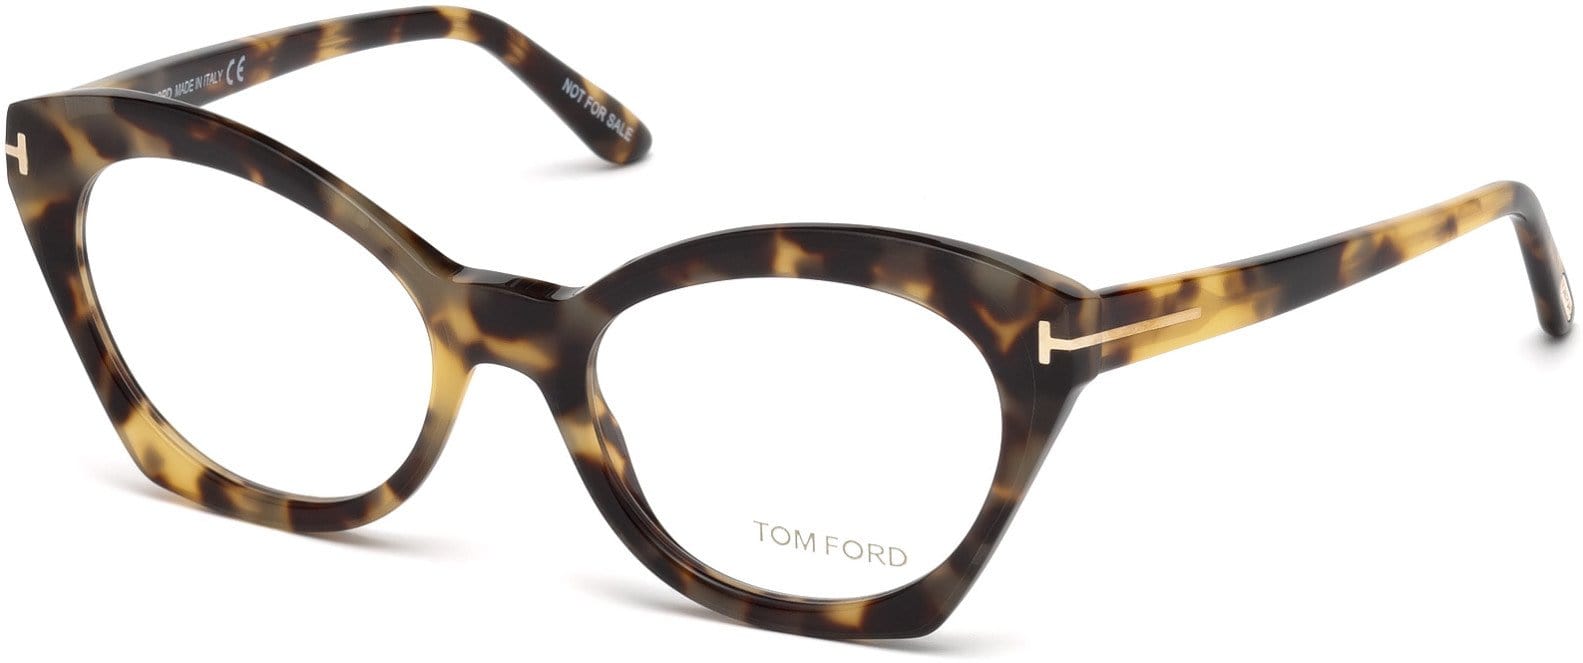 Tom Ford FT5456 Cat Eyeglasses 056-056 - Shiny Tortoise, Shiny Rose Gold "t" Logo